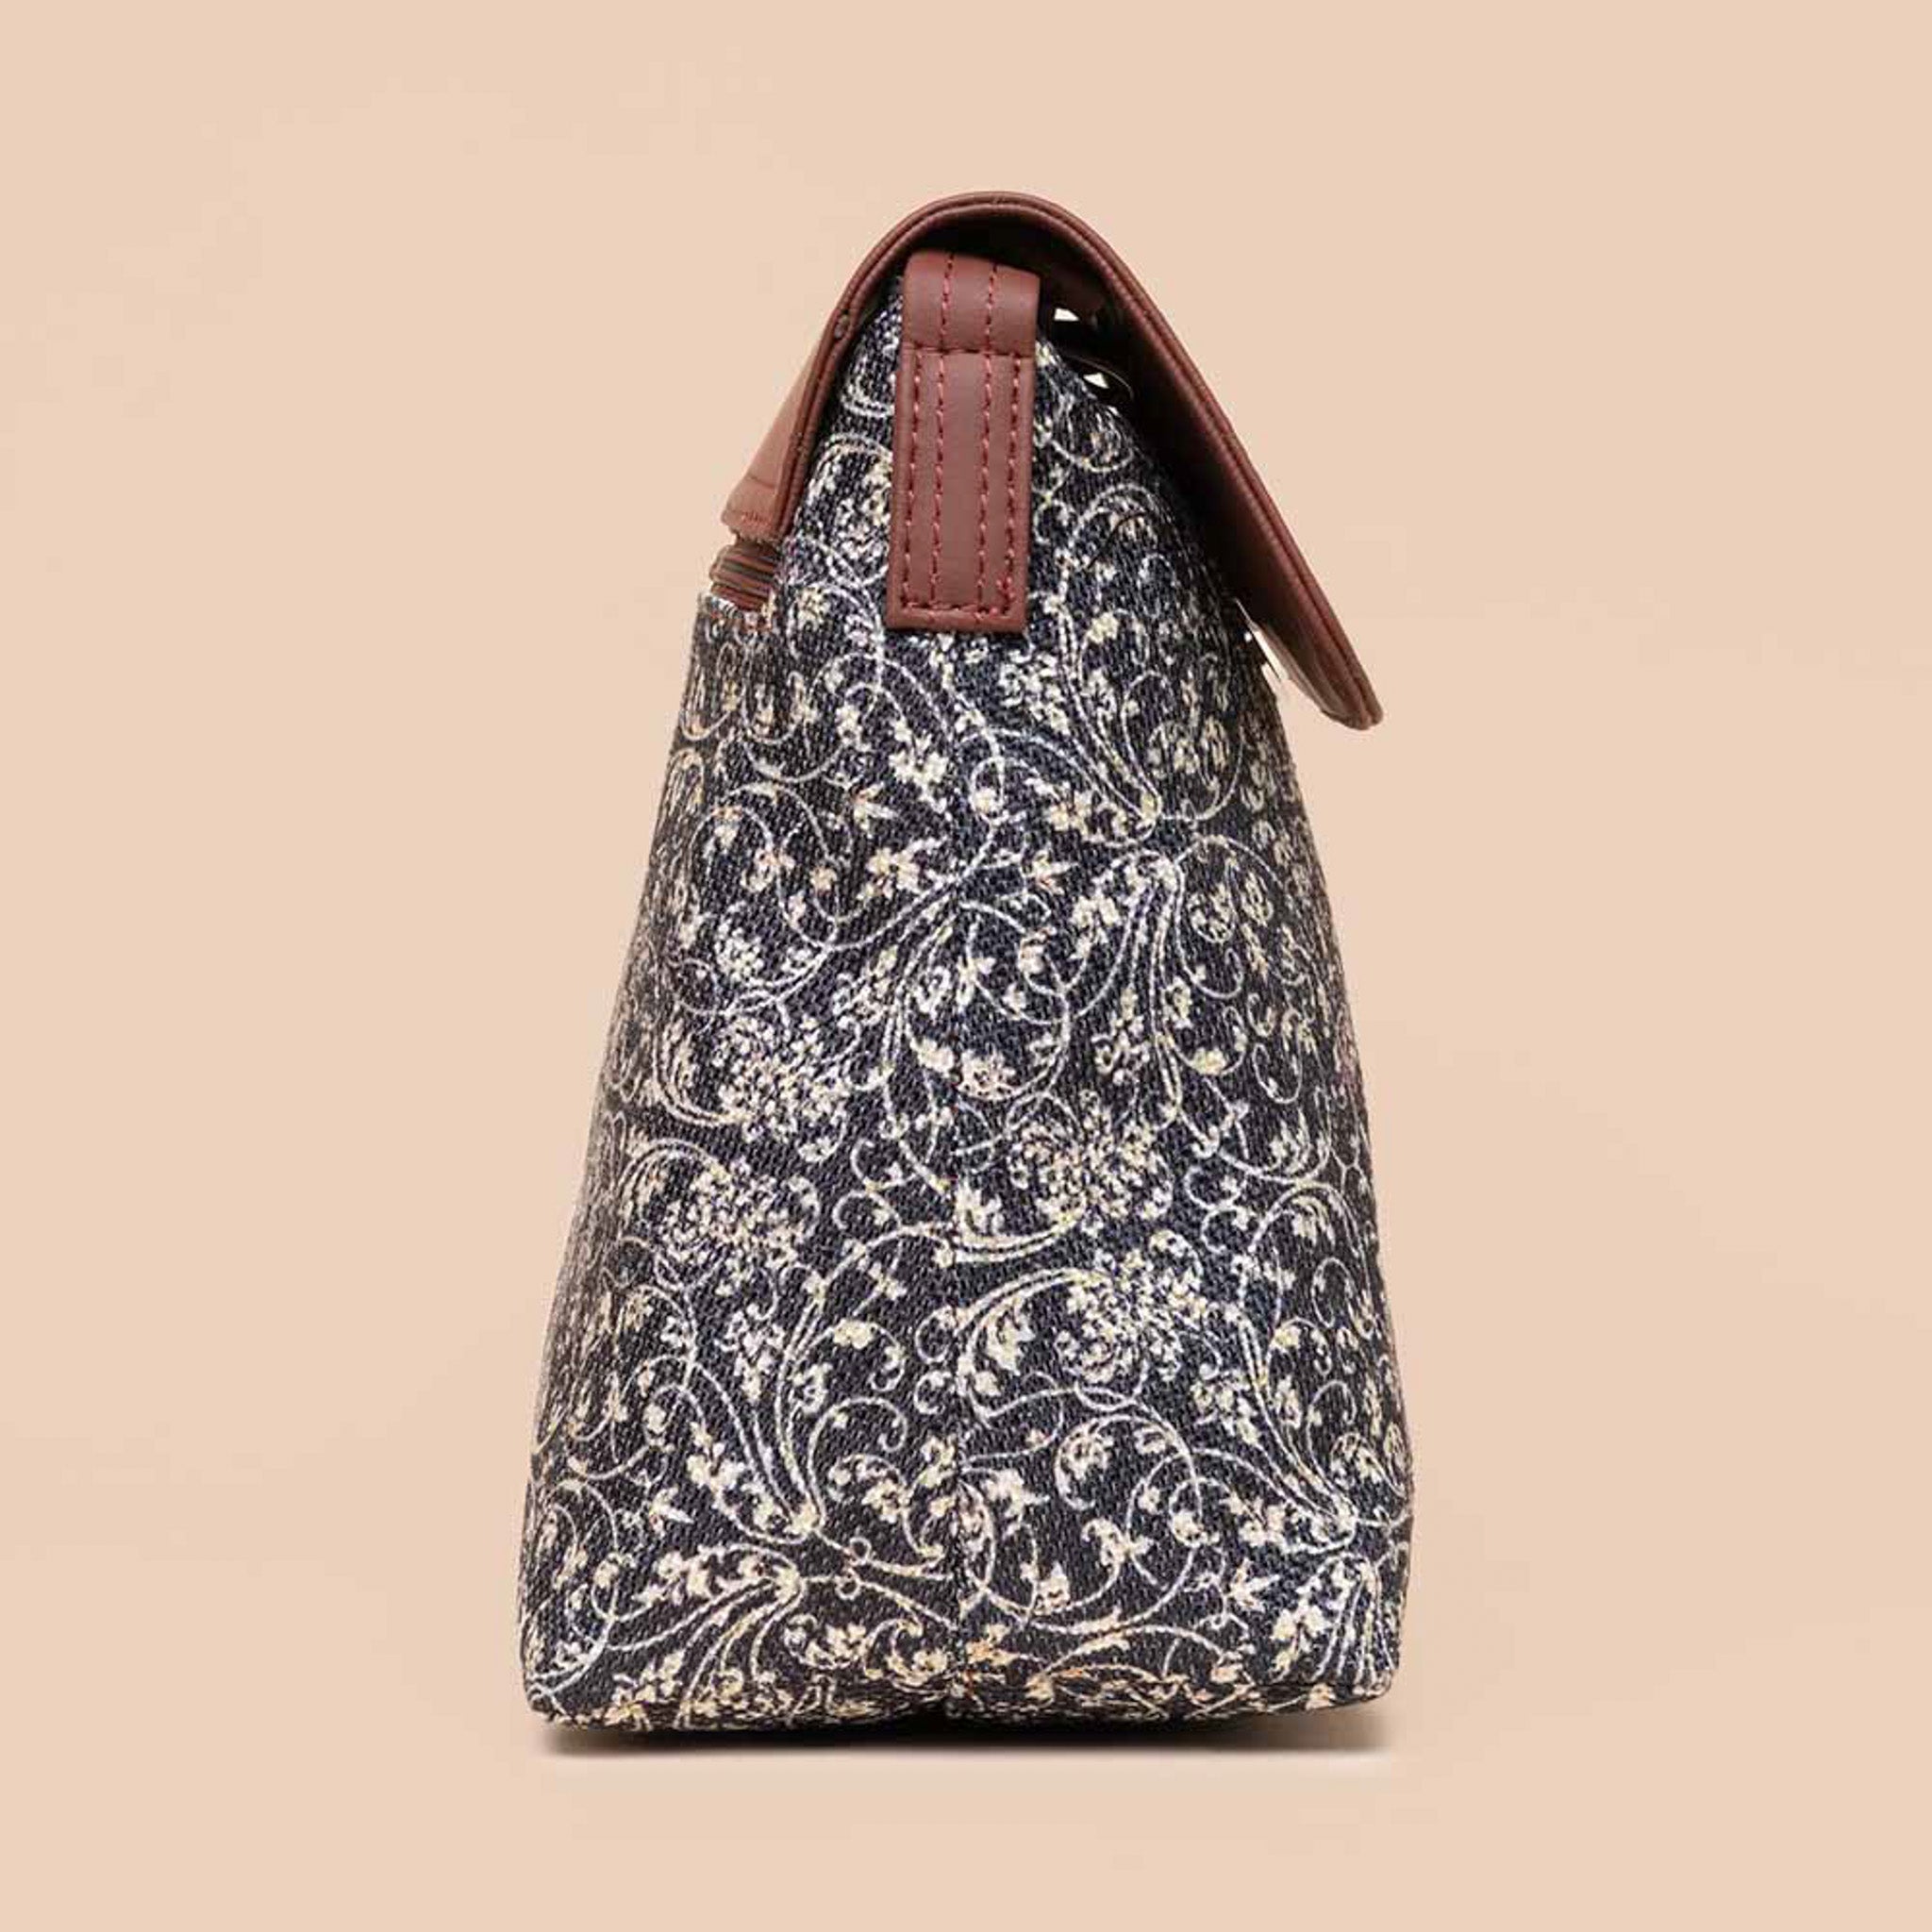 Bidri Kaiser & Lattice Lace - Everyday Tote Bag & Flap Sling Bag Combo